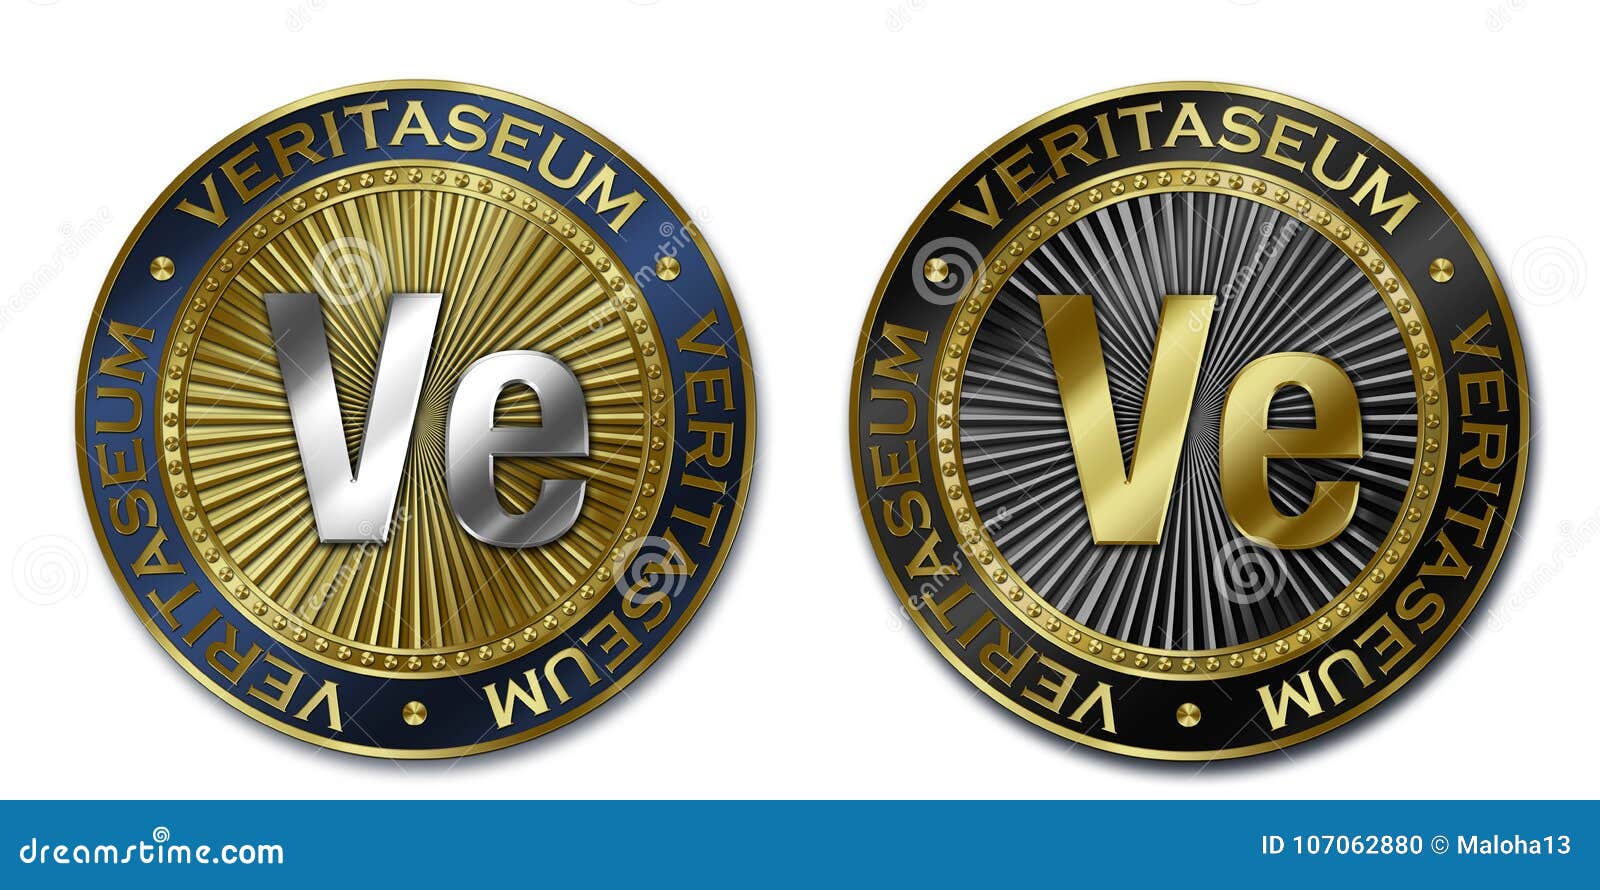 Veritaseum (VERI) live coin price, charts, markets & liquidity